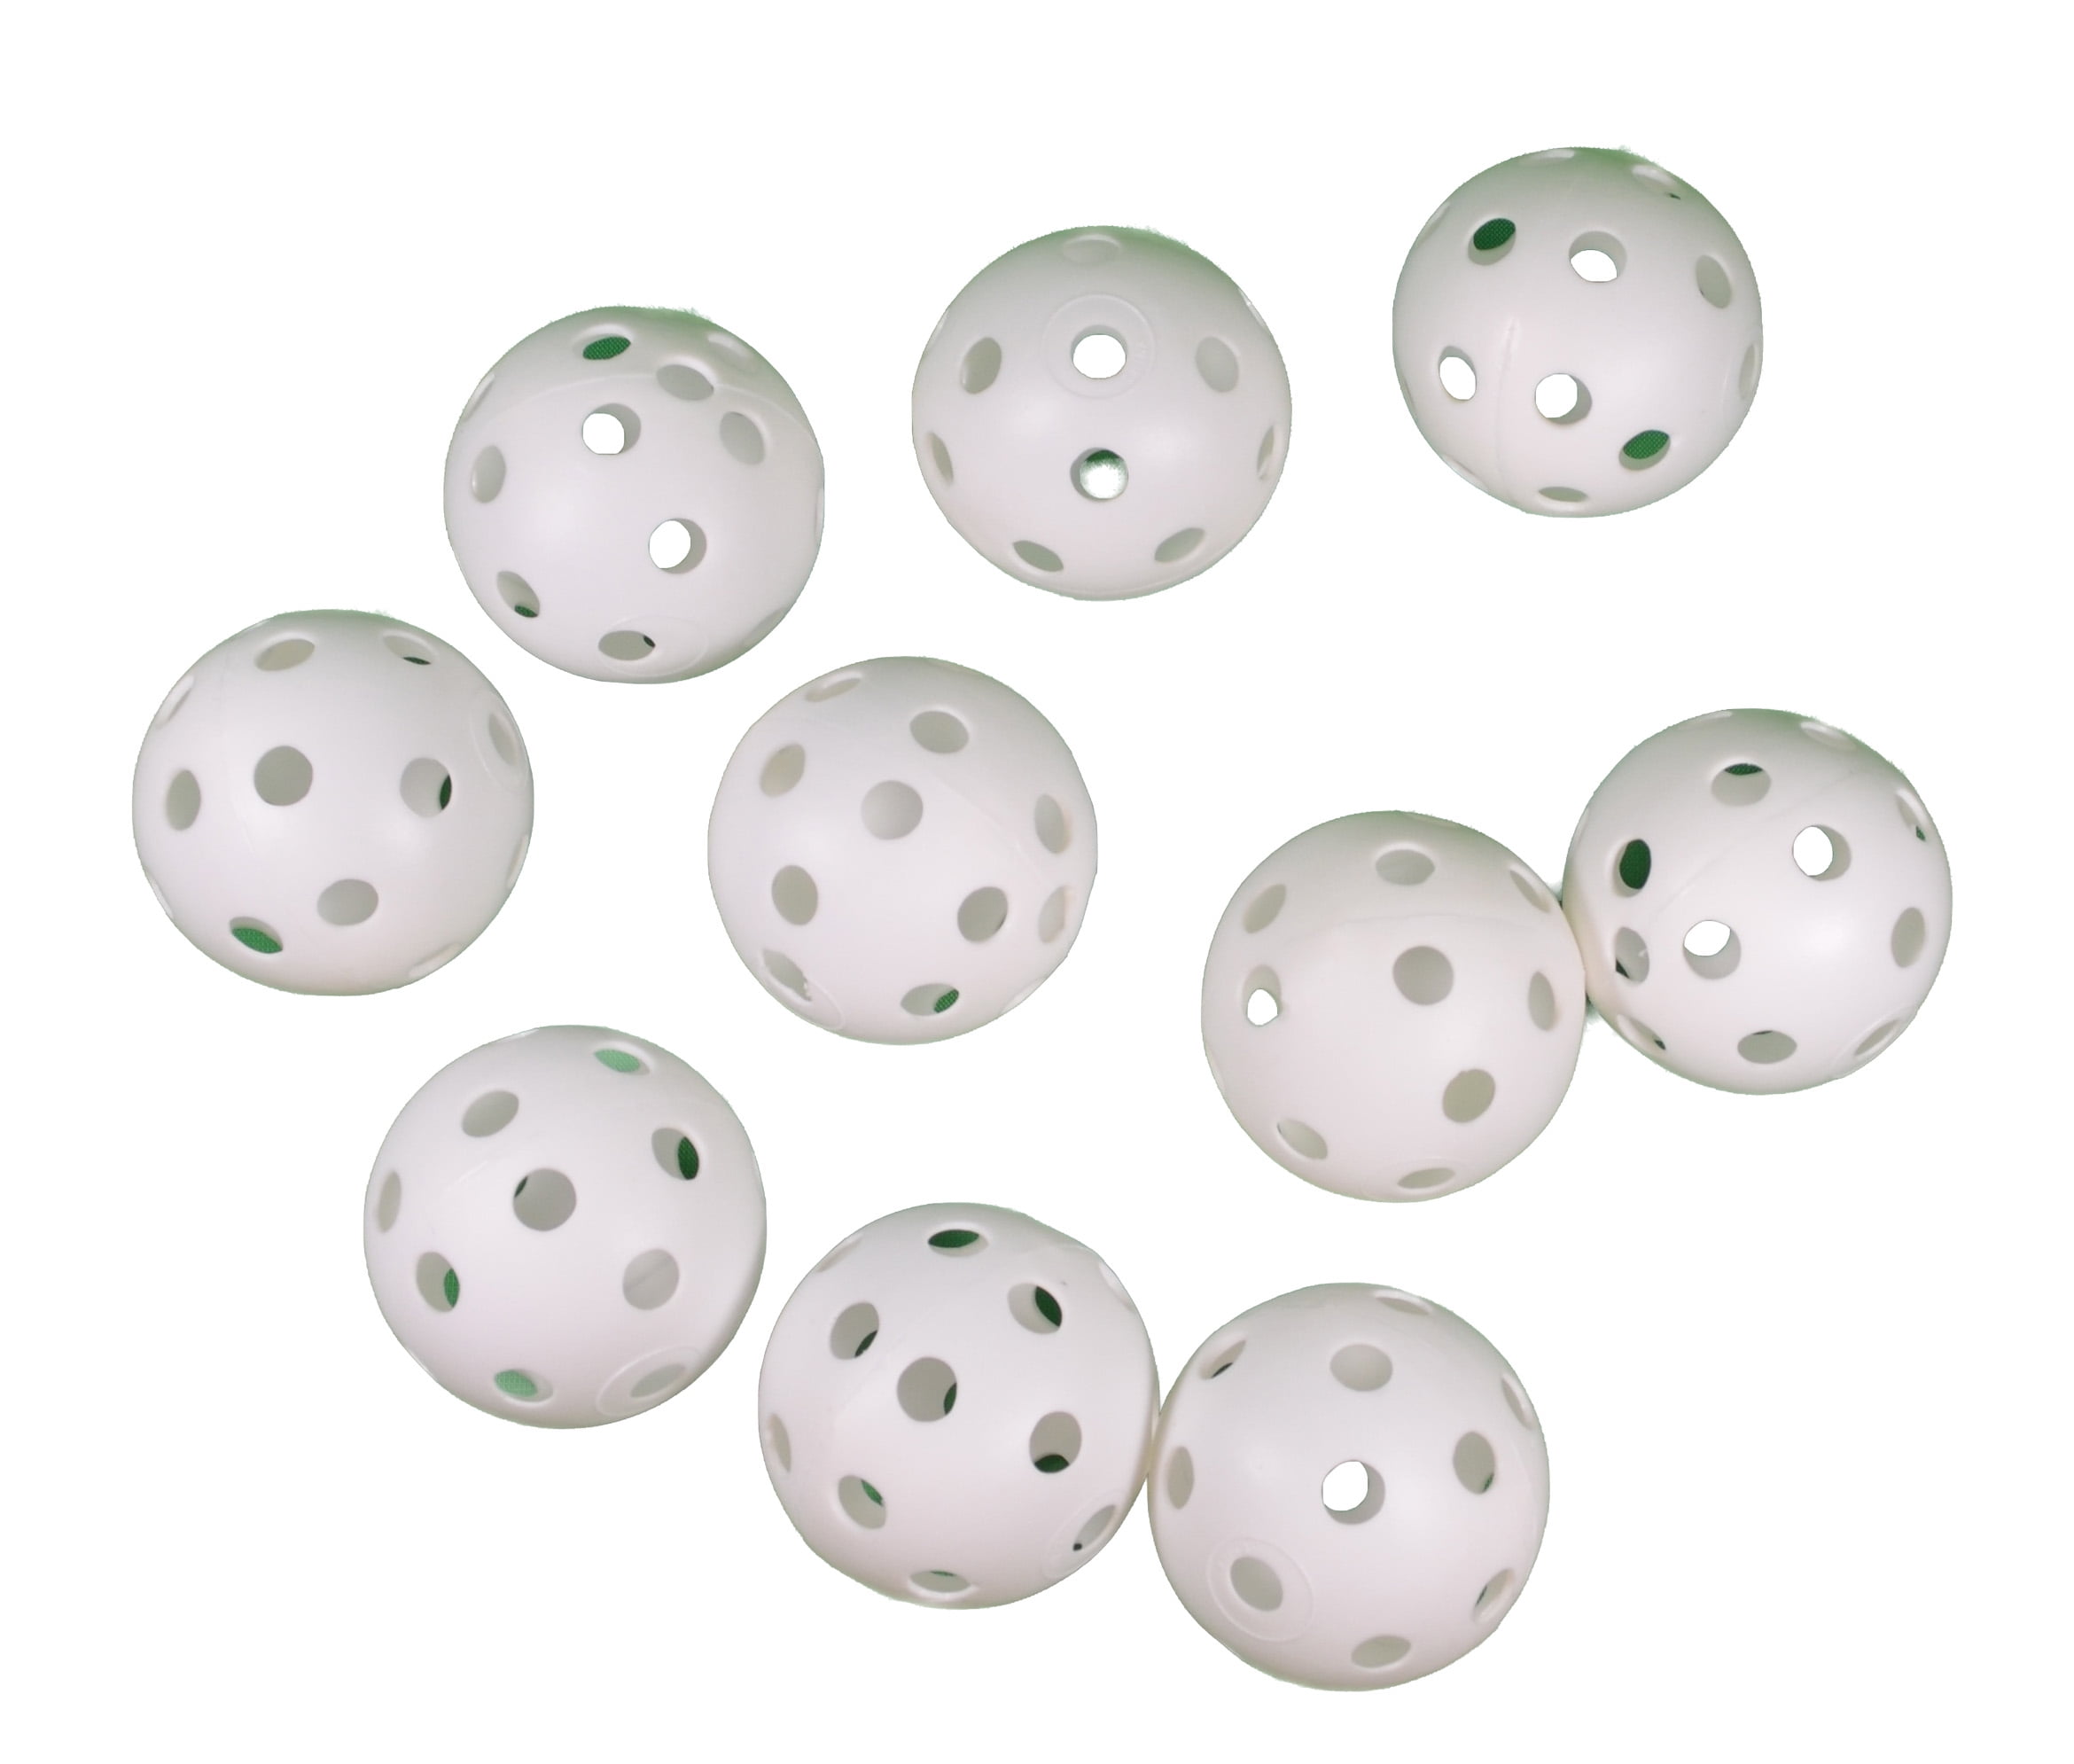 Lot of 48 White Plastic Whiffle Balls Practice For BASEBALL or SOFTBALL 